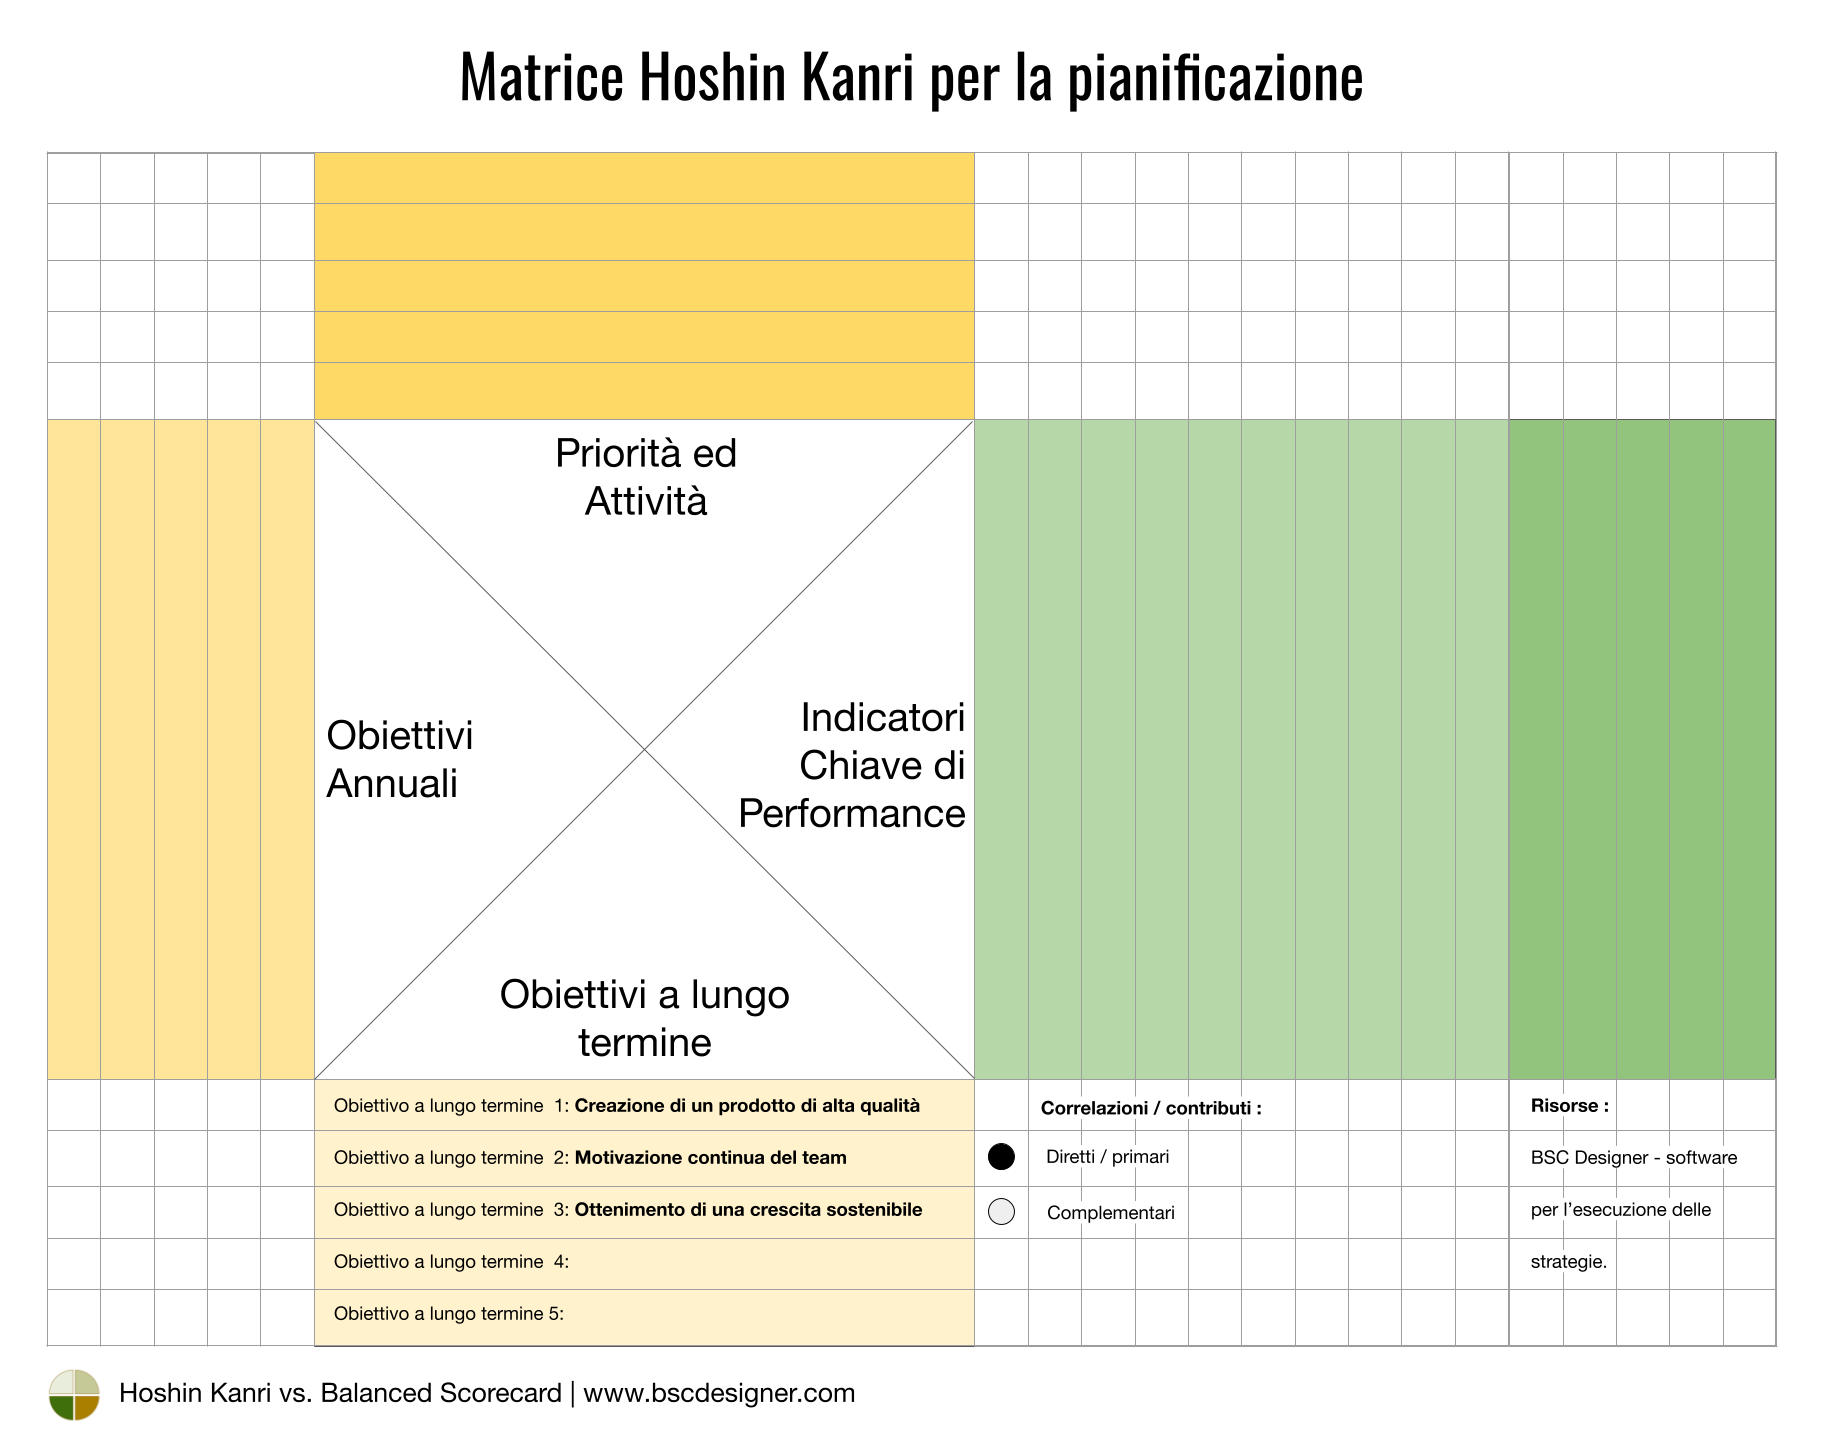 Matrice Hoshin Kanri - Obiettivi a lungo termine